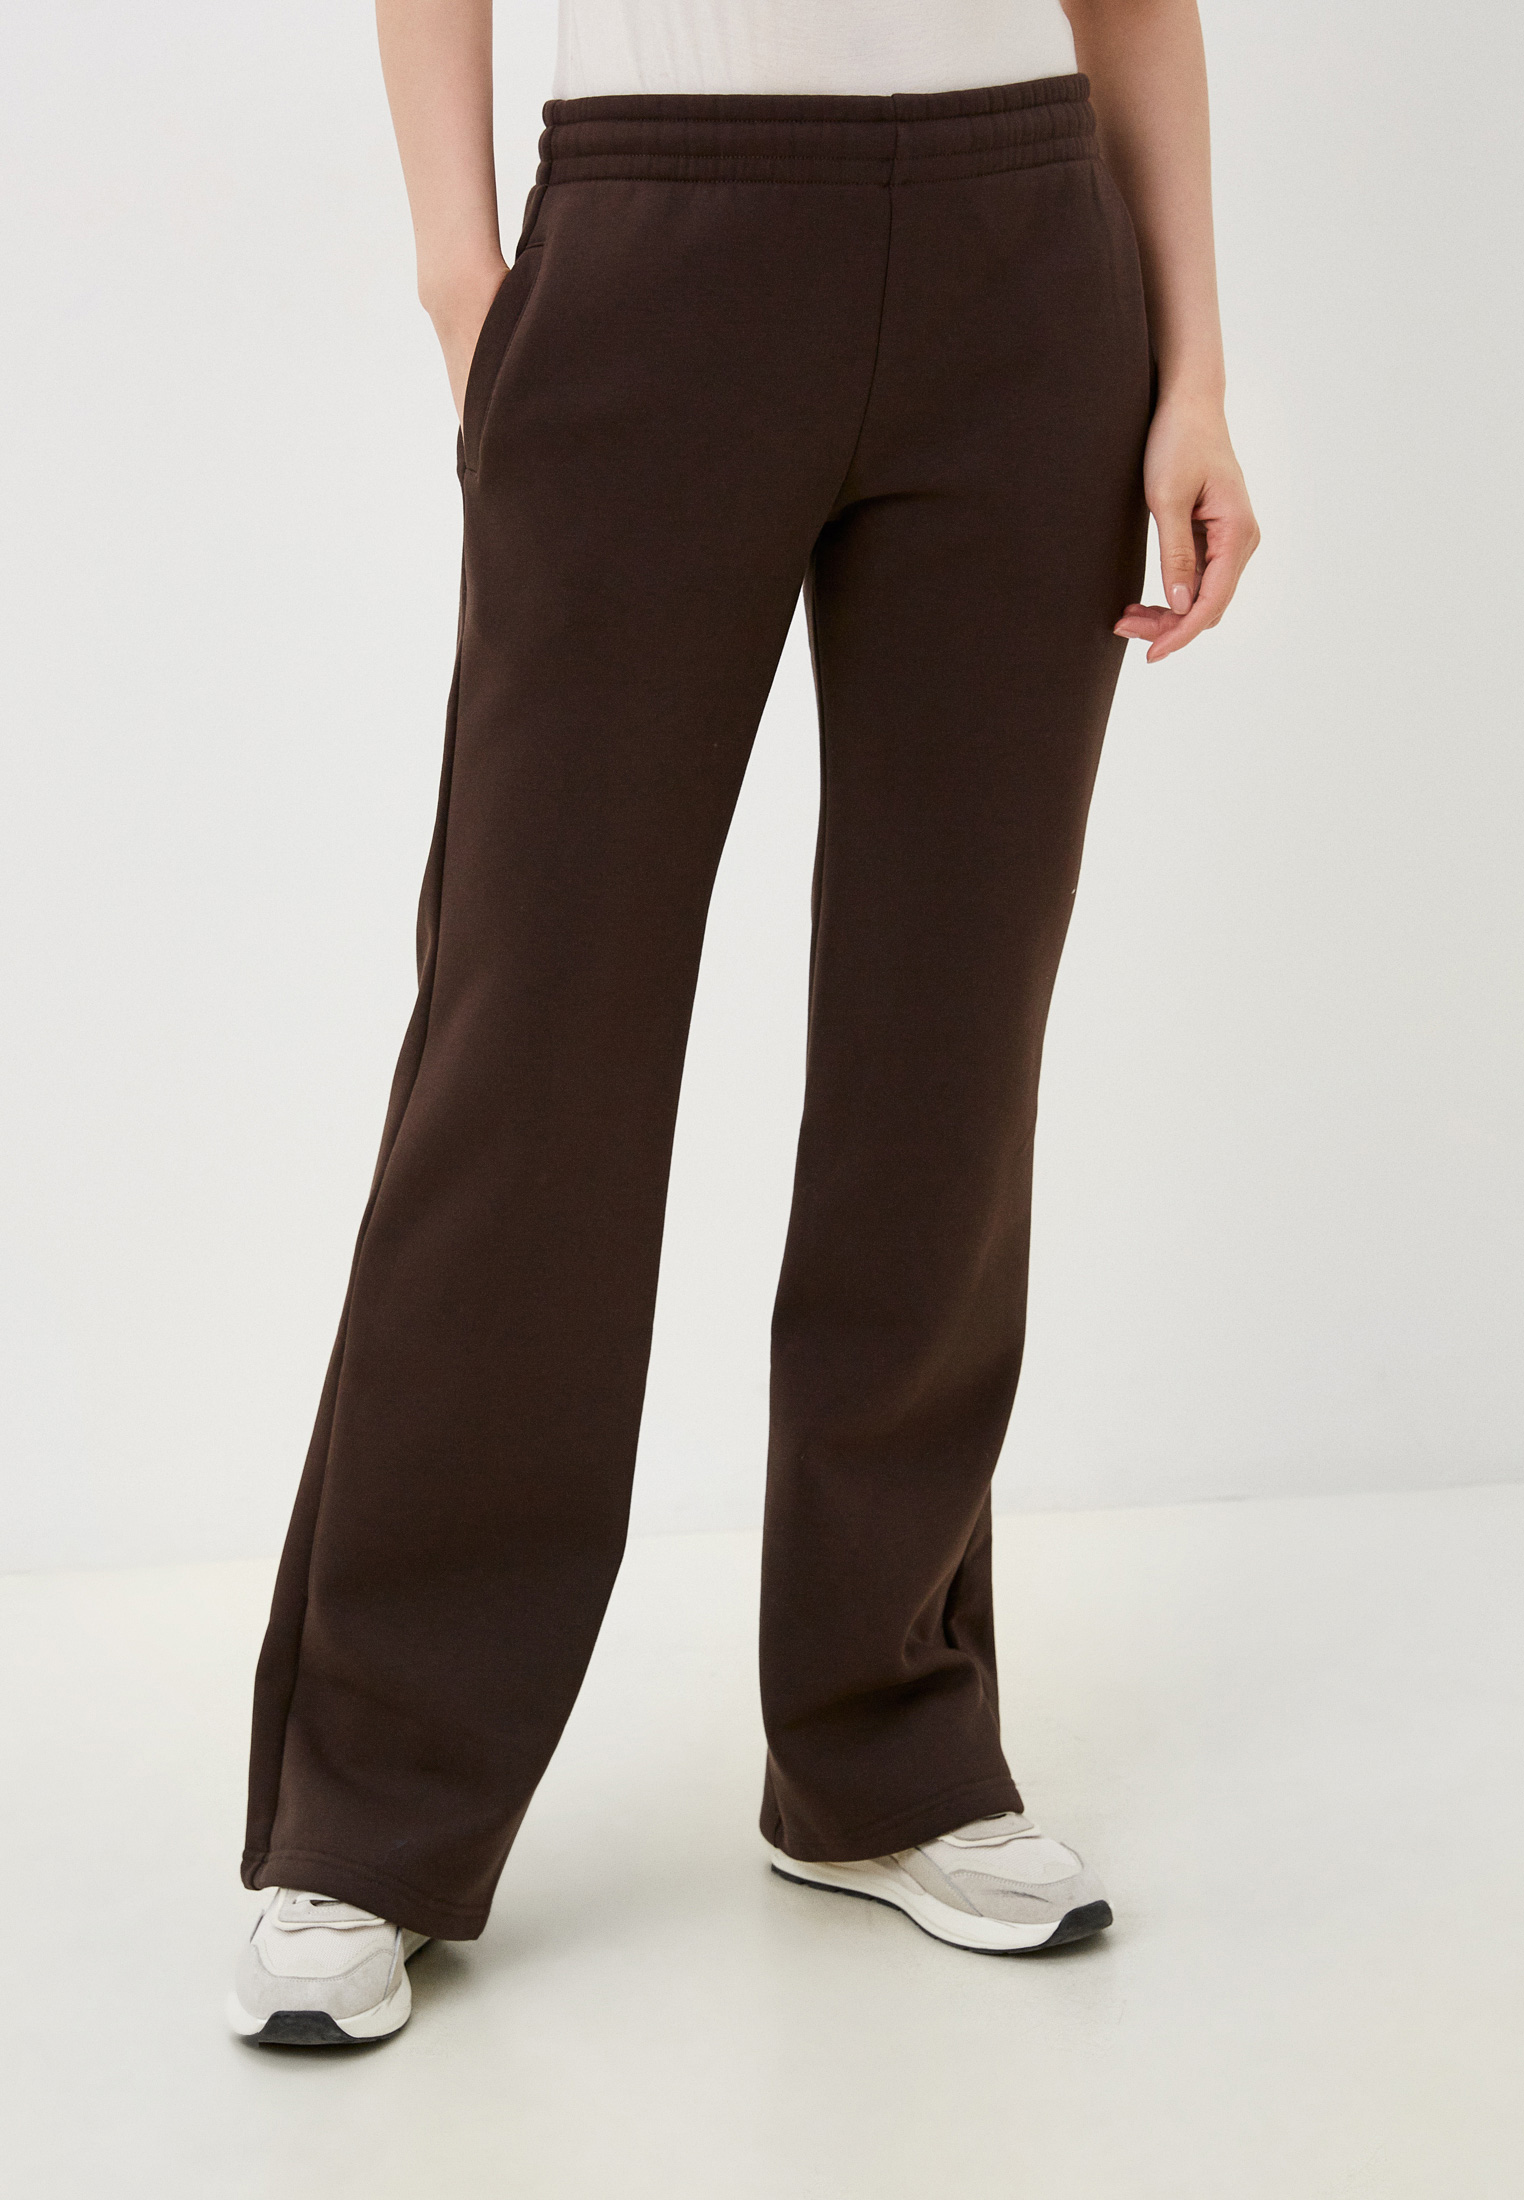 Женские брюки Irnby LG23-1802